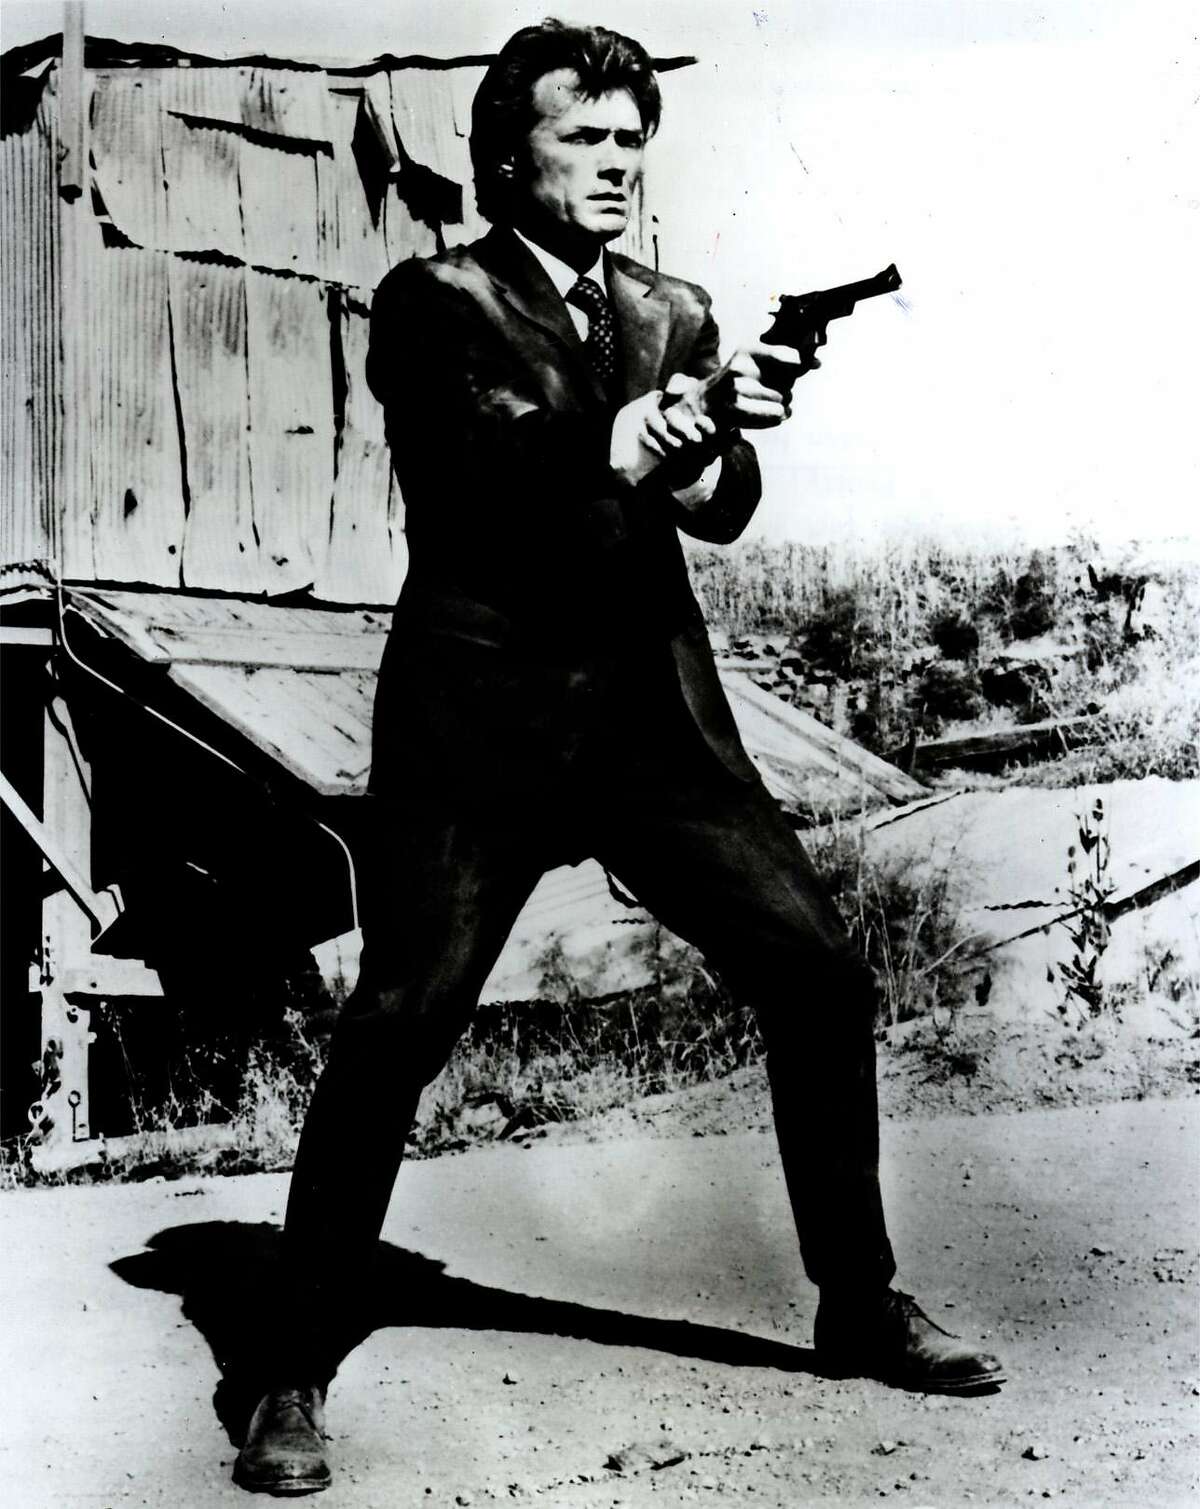 Clint Eastwood as Dirty Harry Callahan